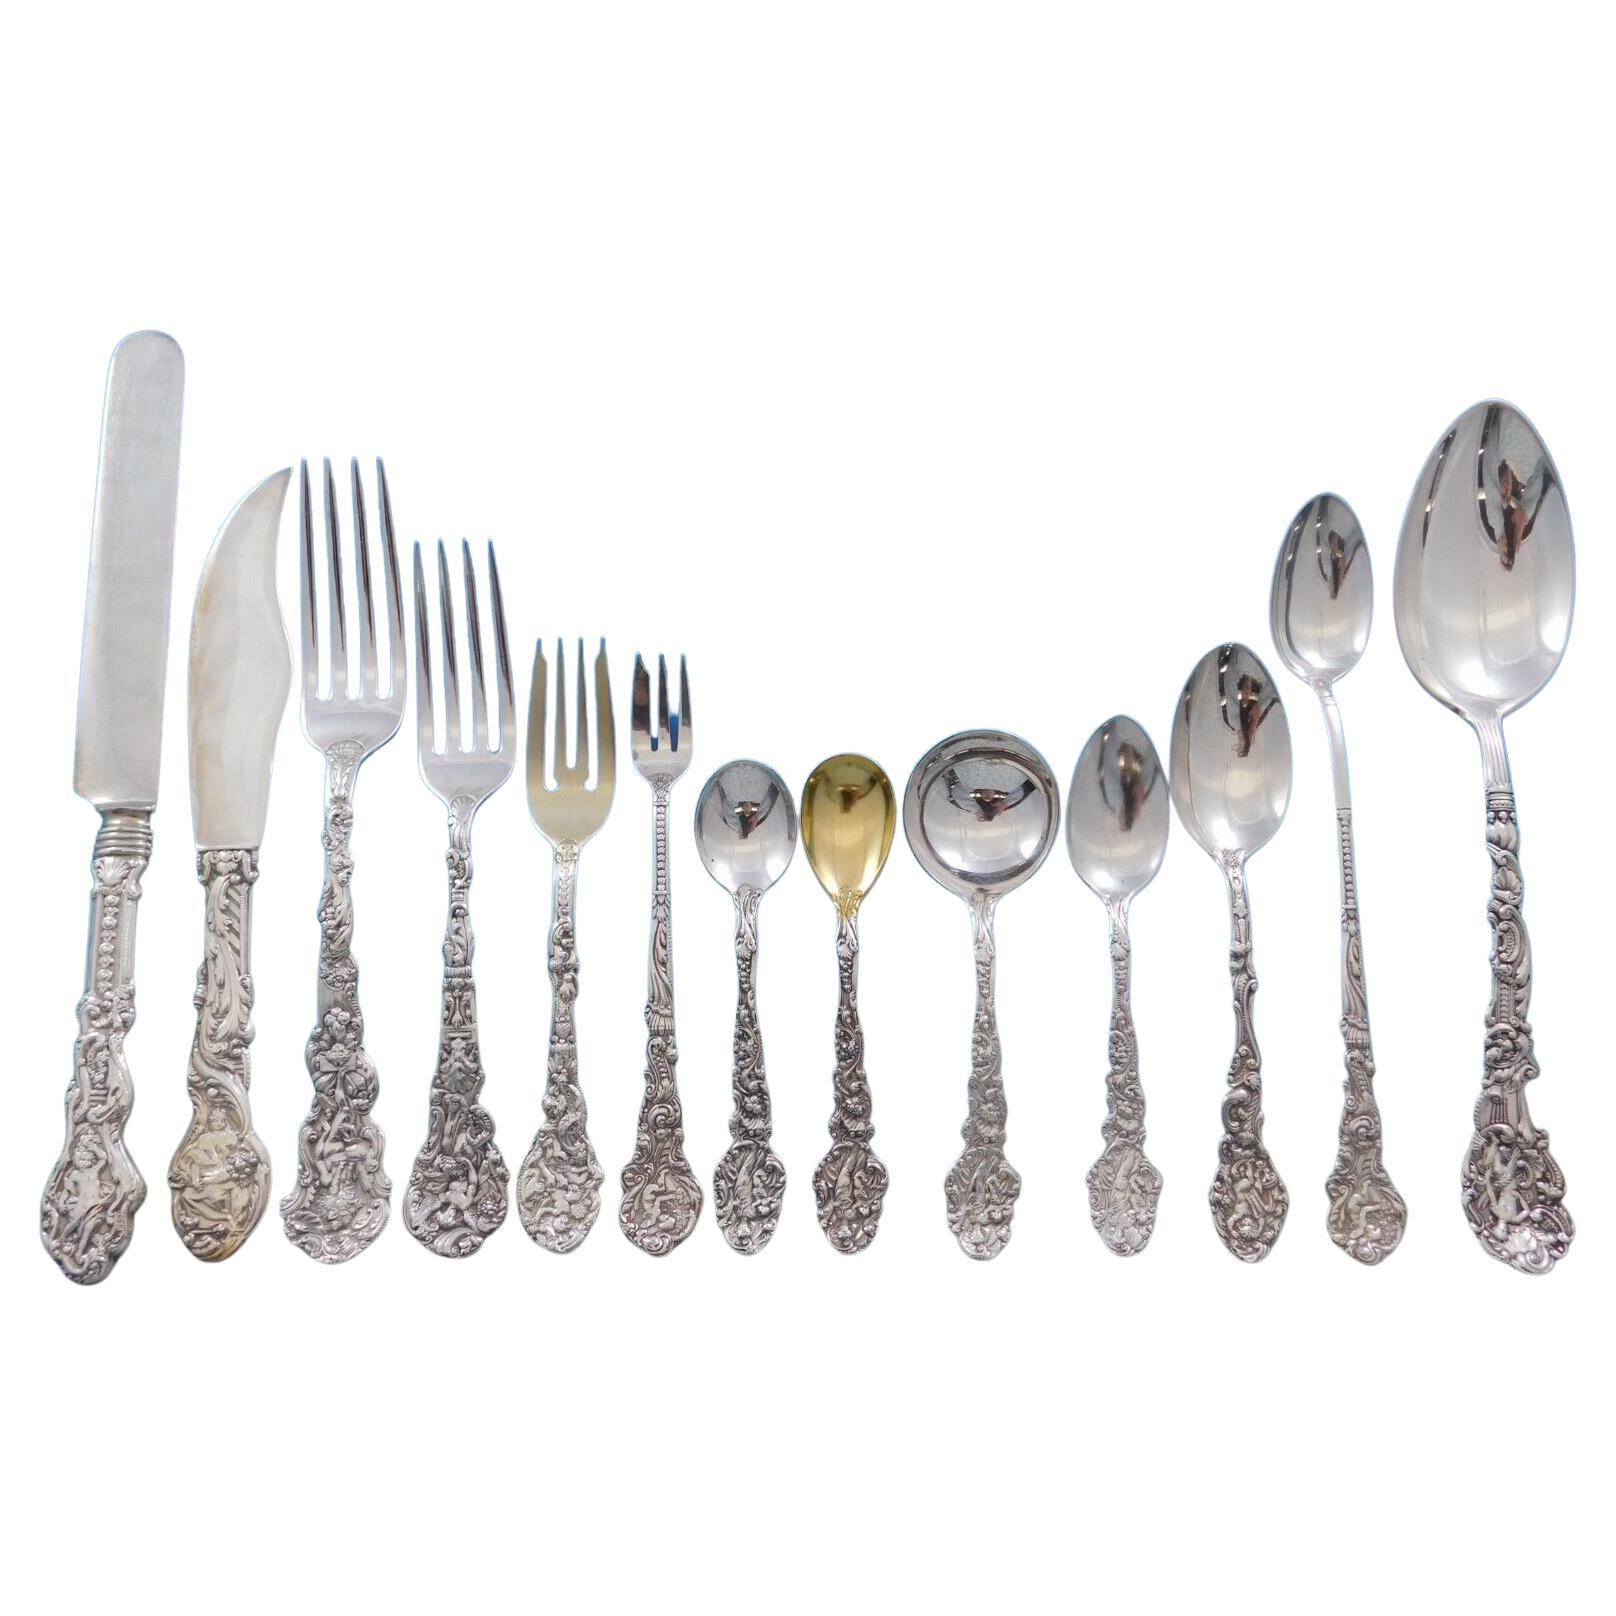 Versailles by Gorham Sterling Silver Flatware Service 12 Set 178 Pieces Dinner